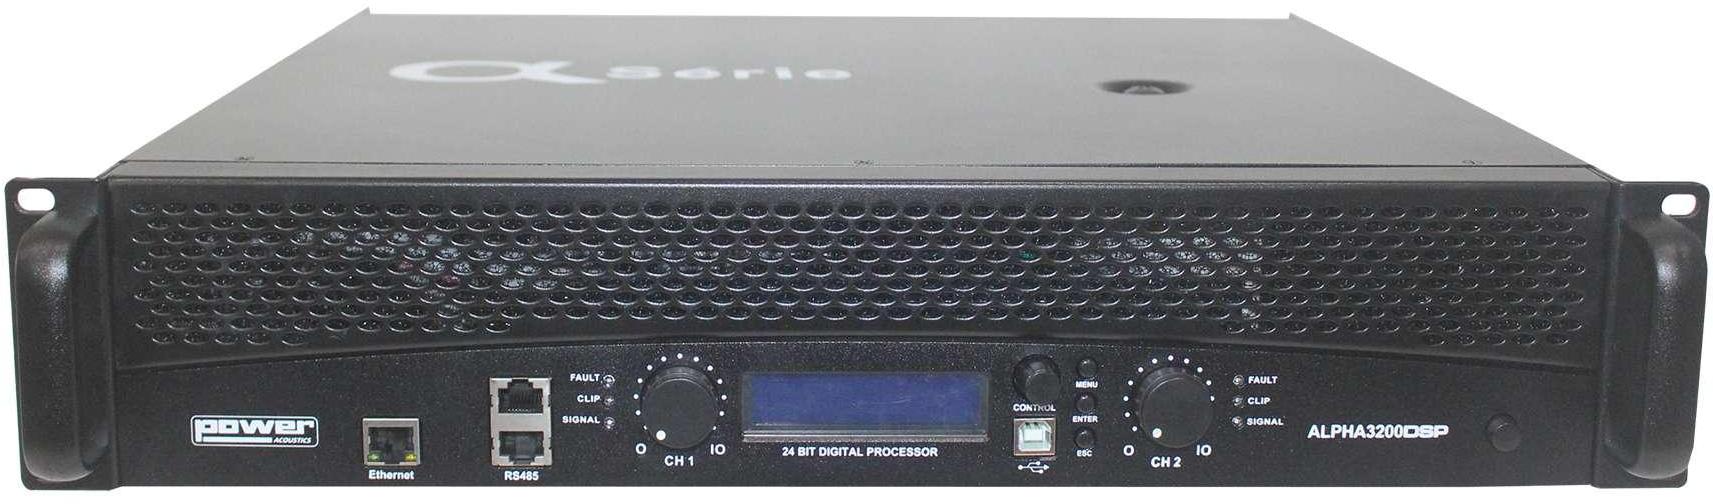 Stereo endstüfe Power Alpha 3200 Dsp